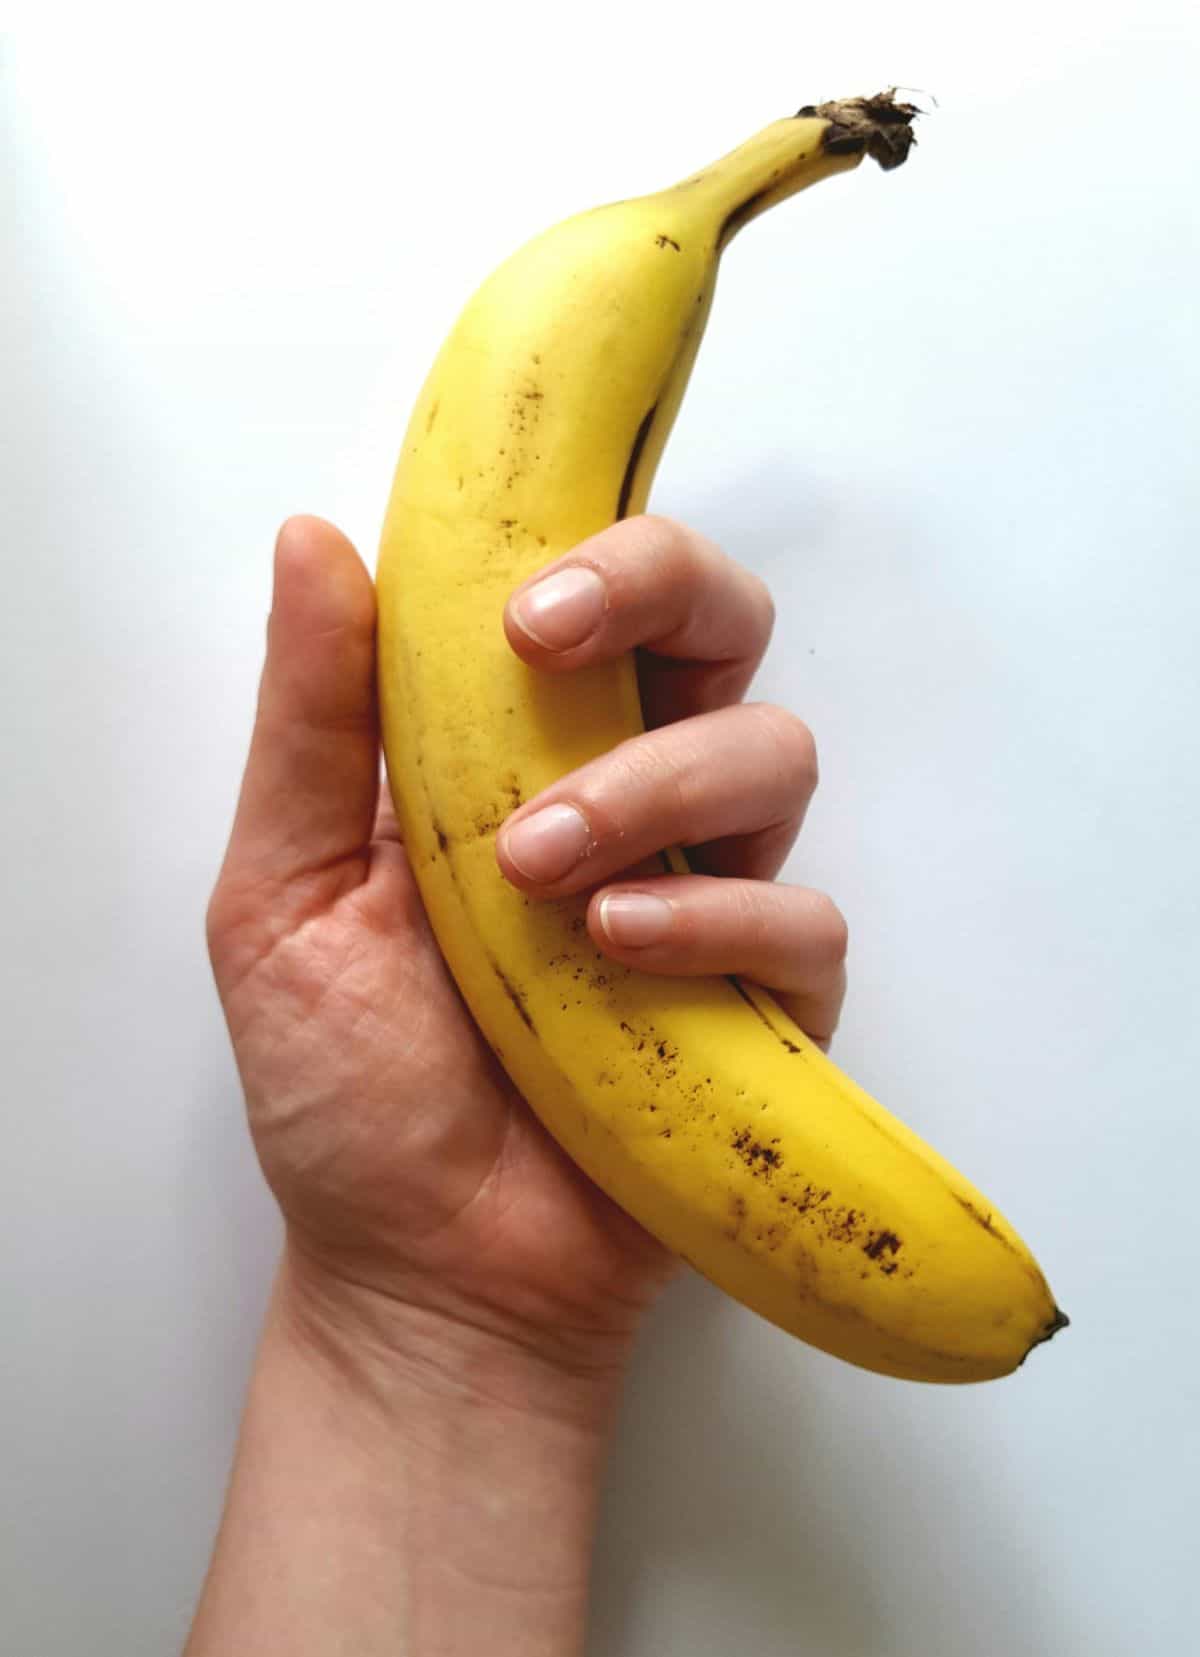 banana in someones hand